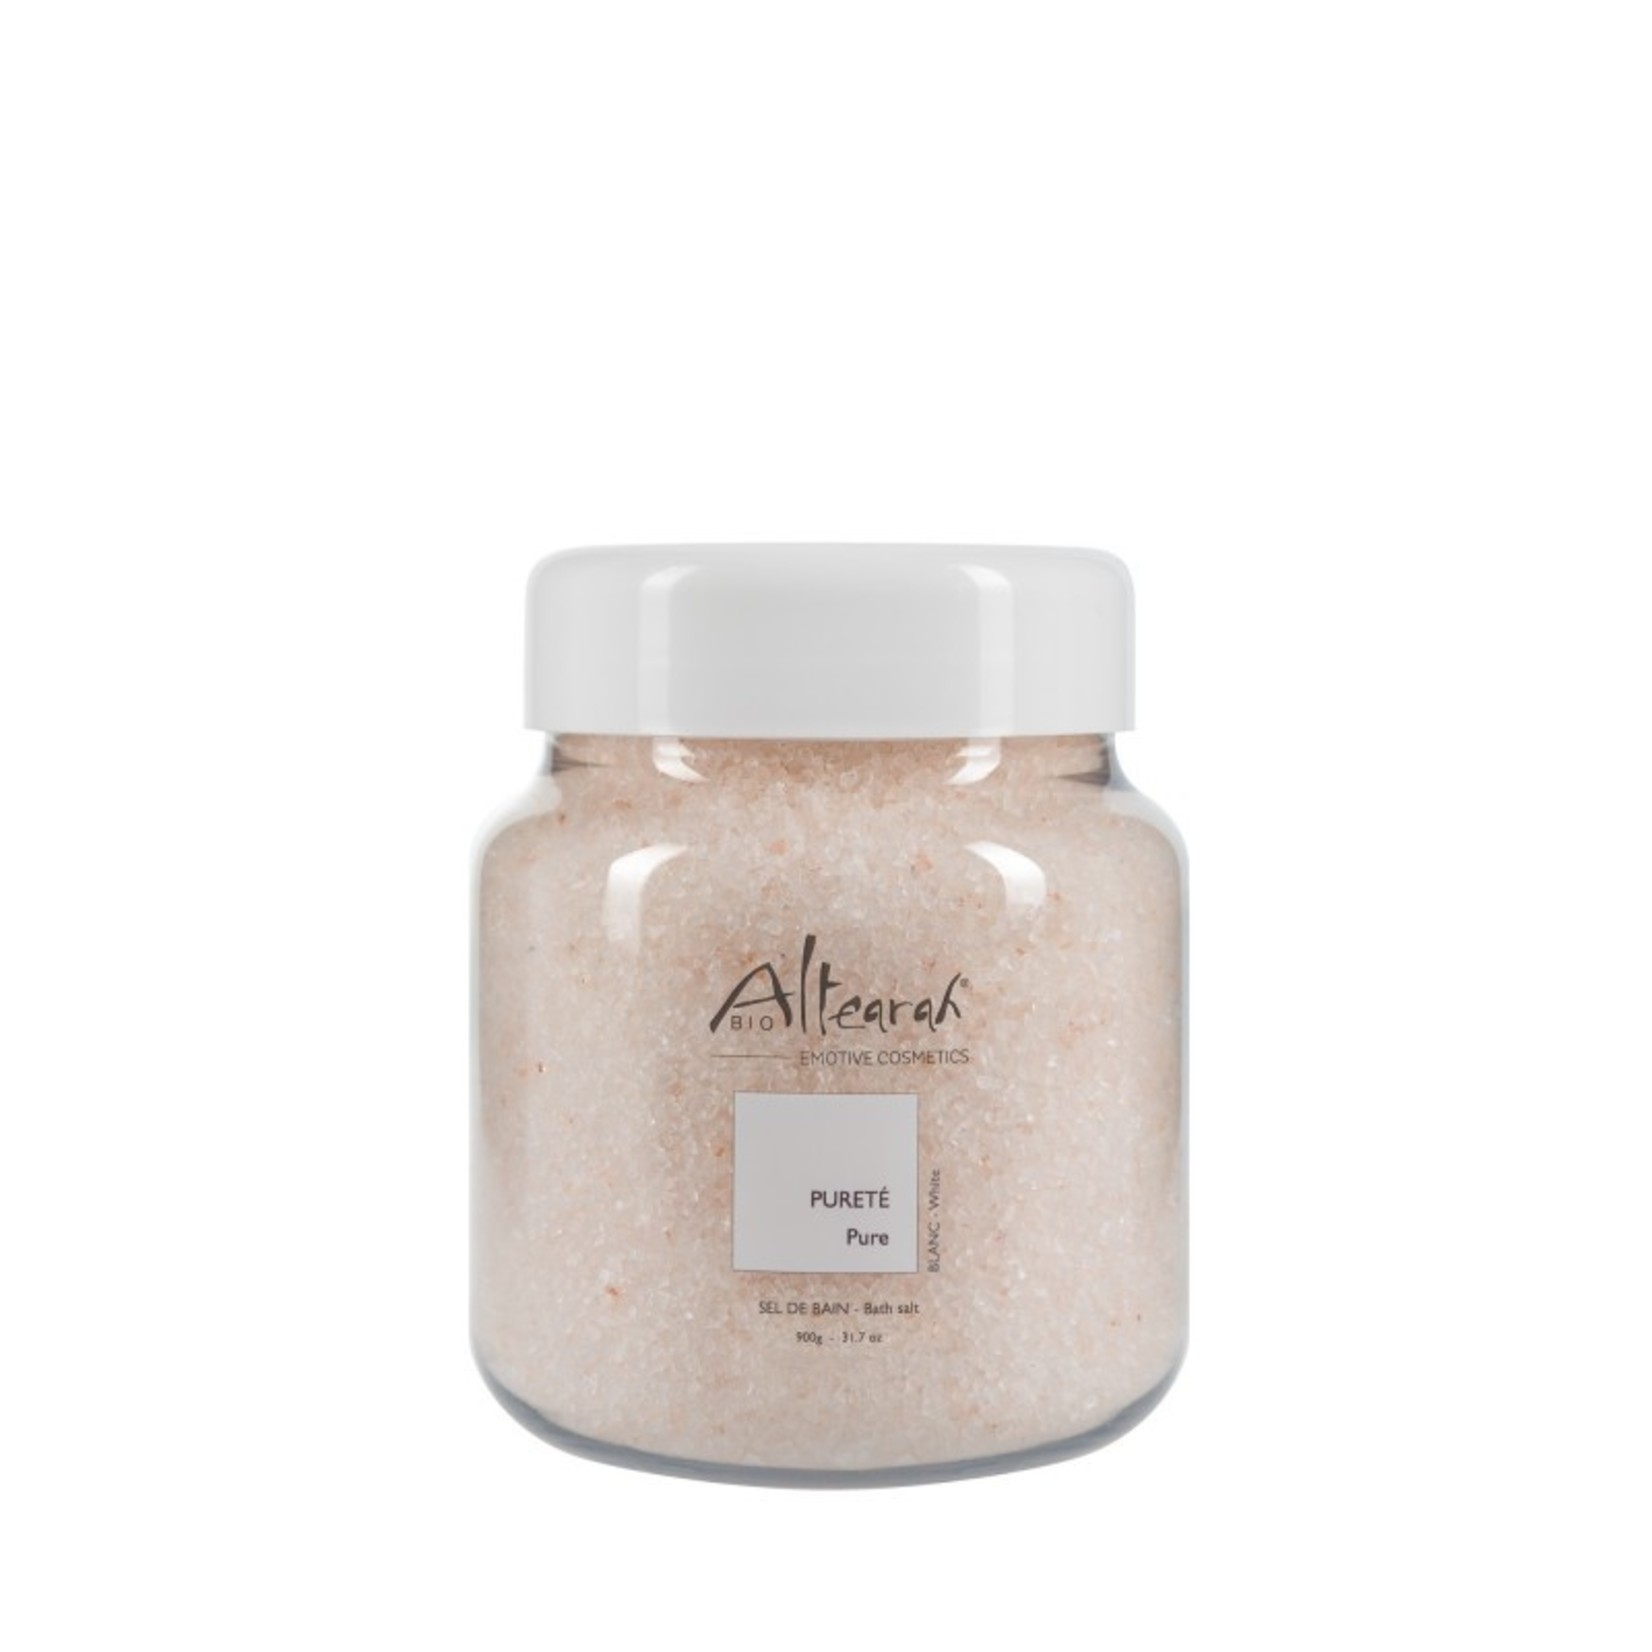 Altearah Bath Salt - (White) Pure